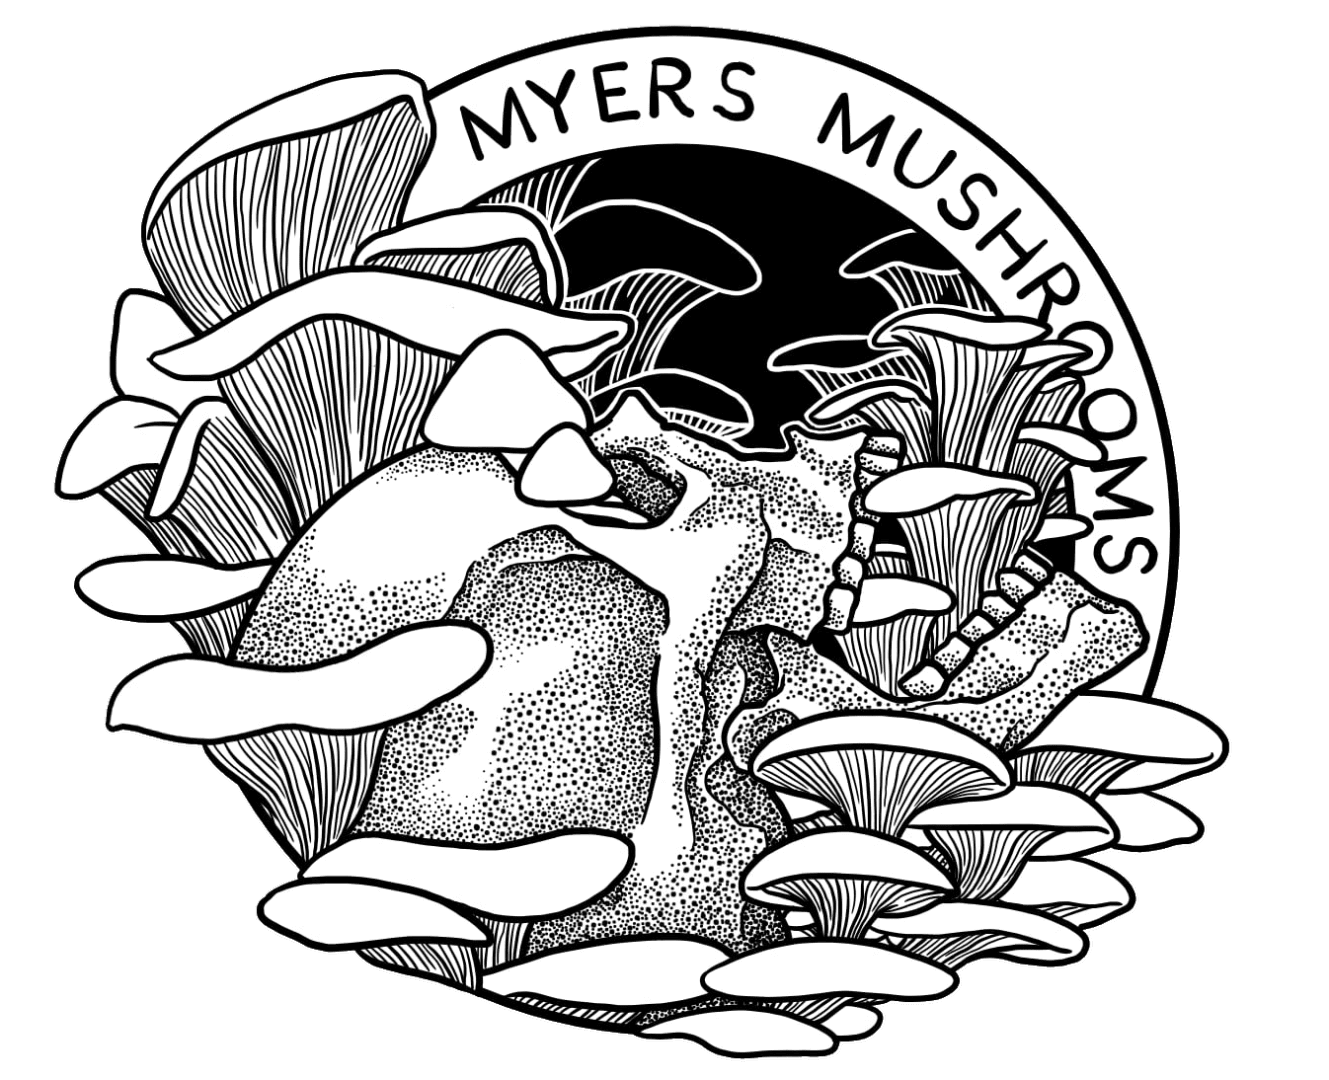 Myers Mushrooms